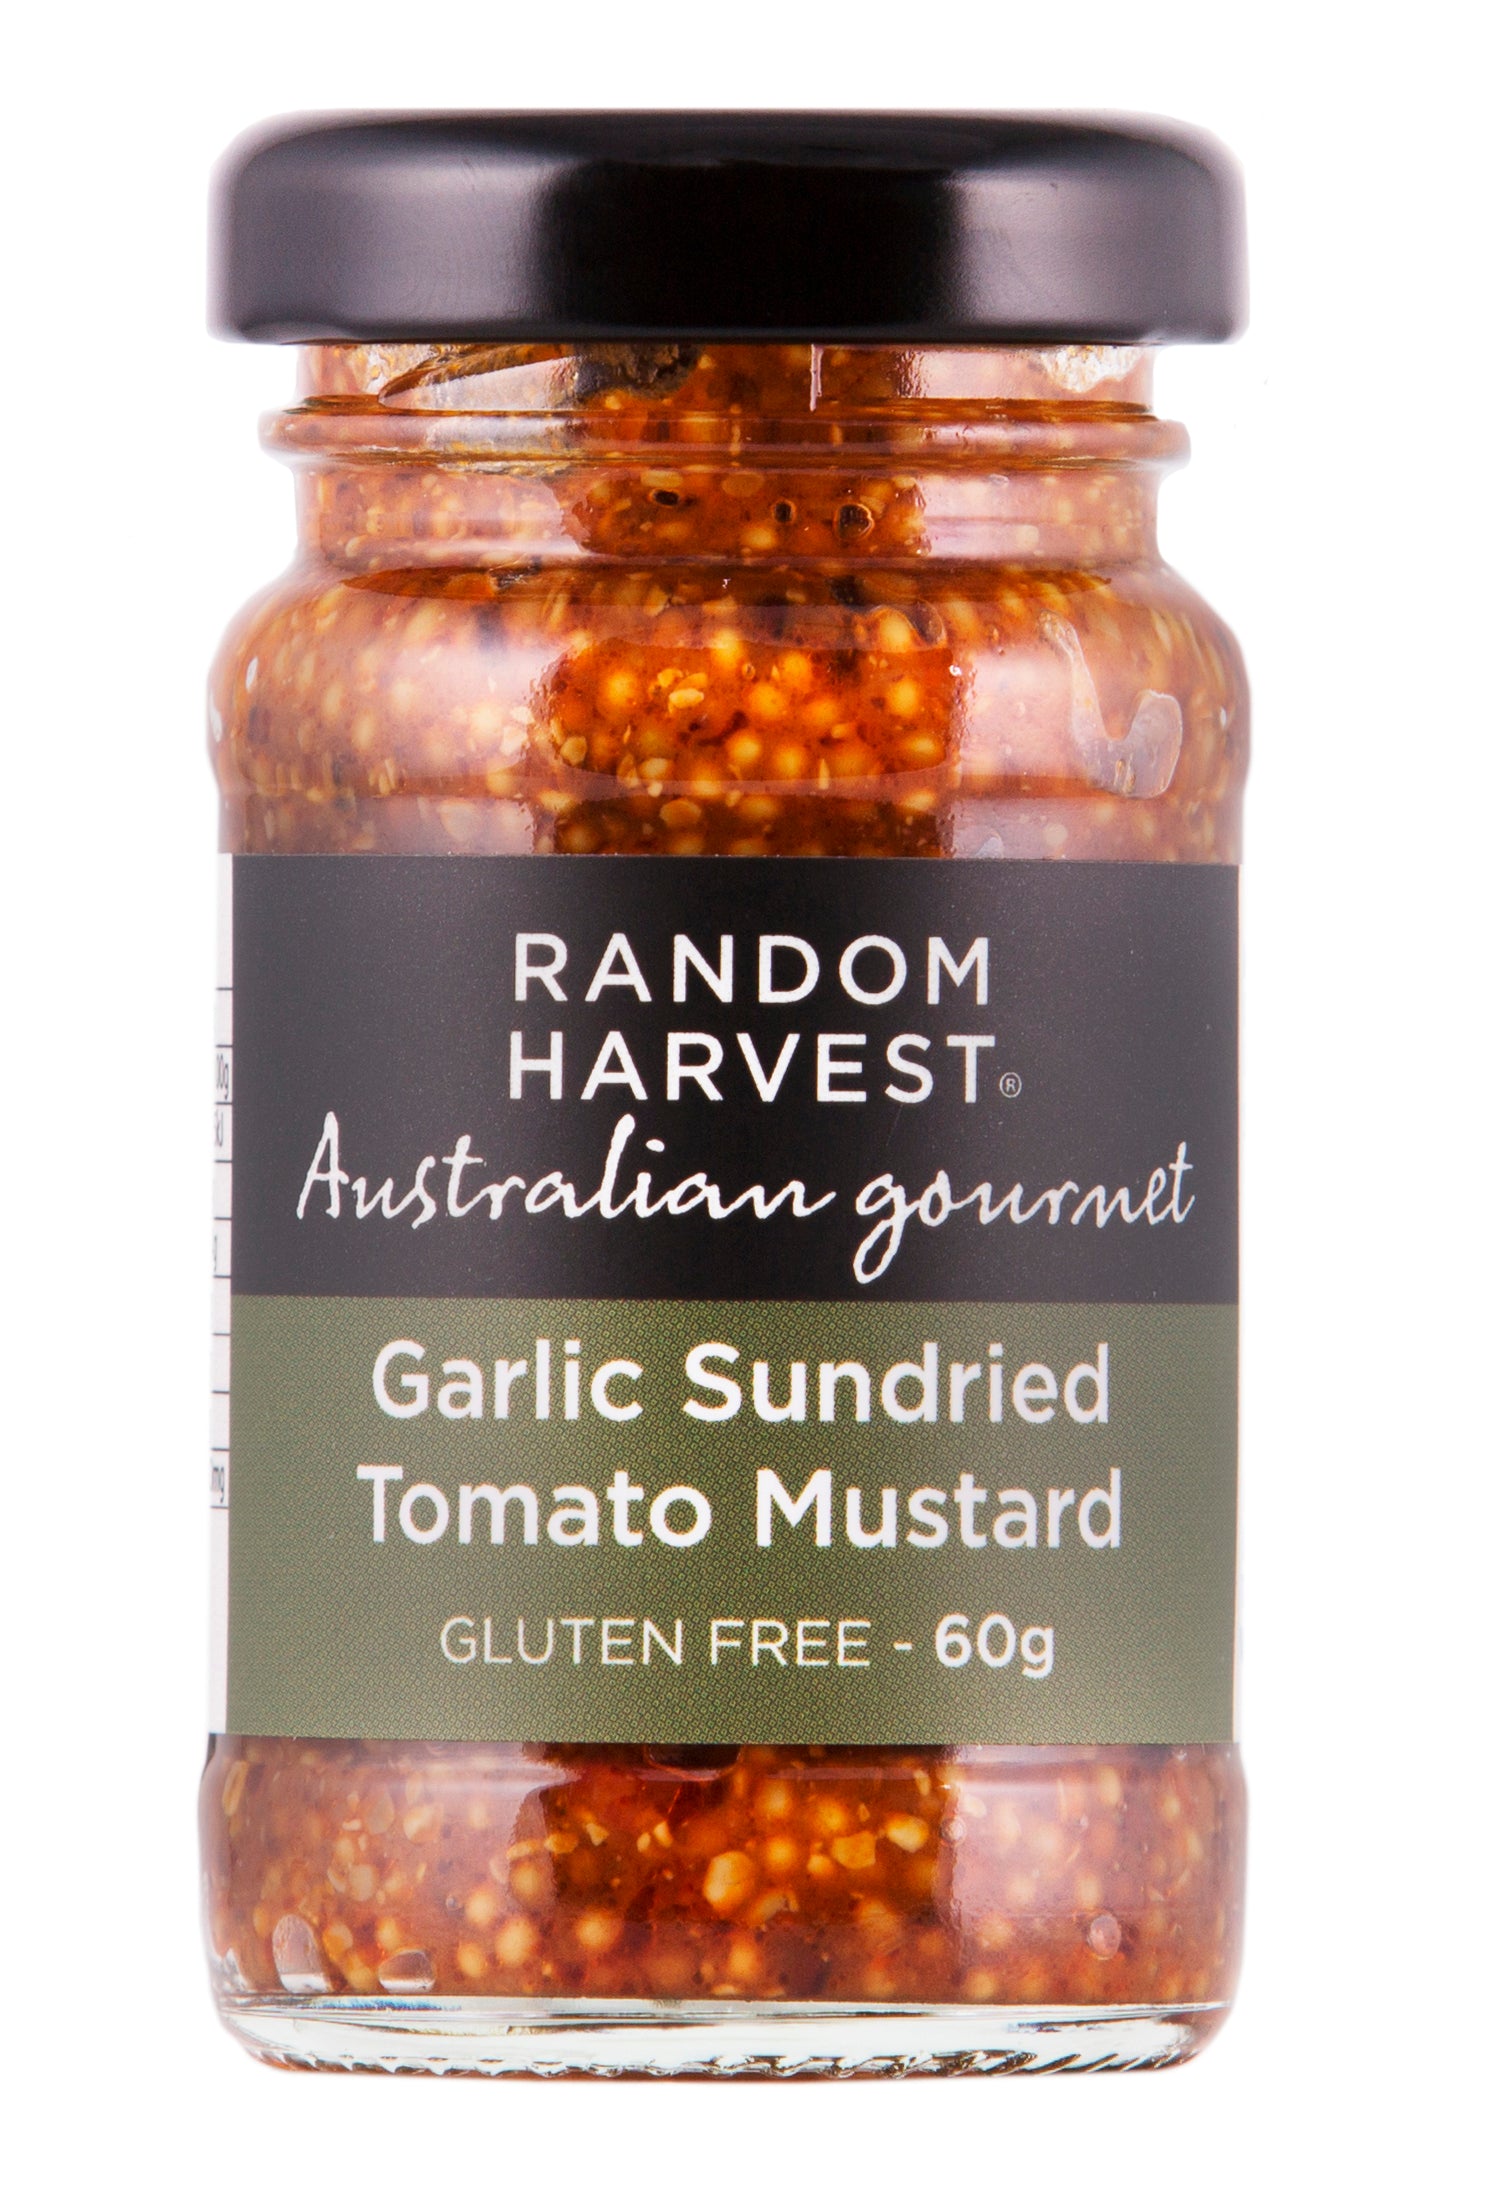 Garlic Sundried Tomato Mustard